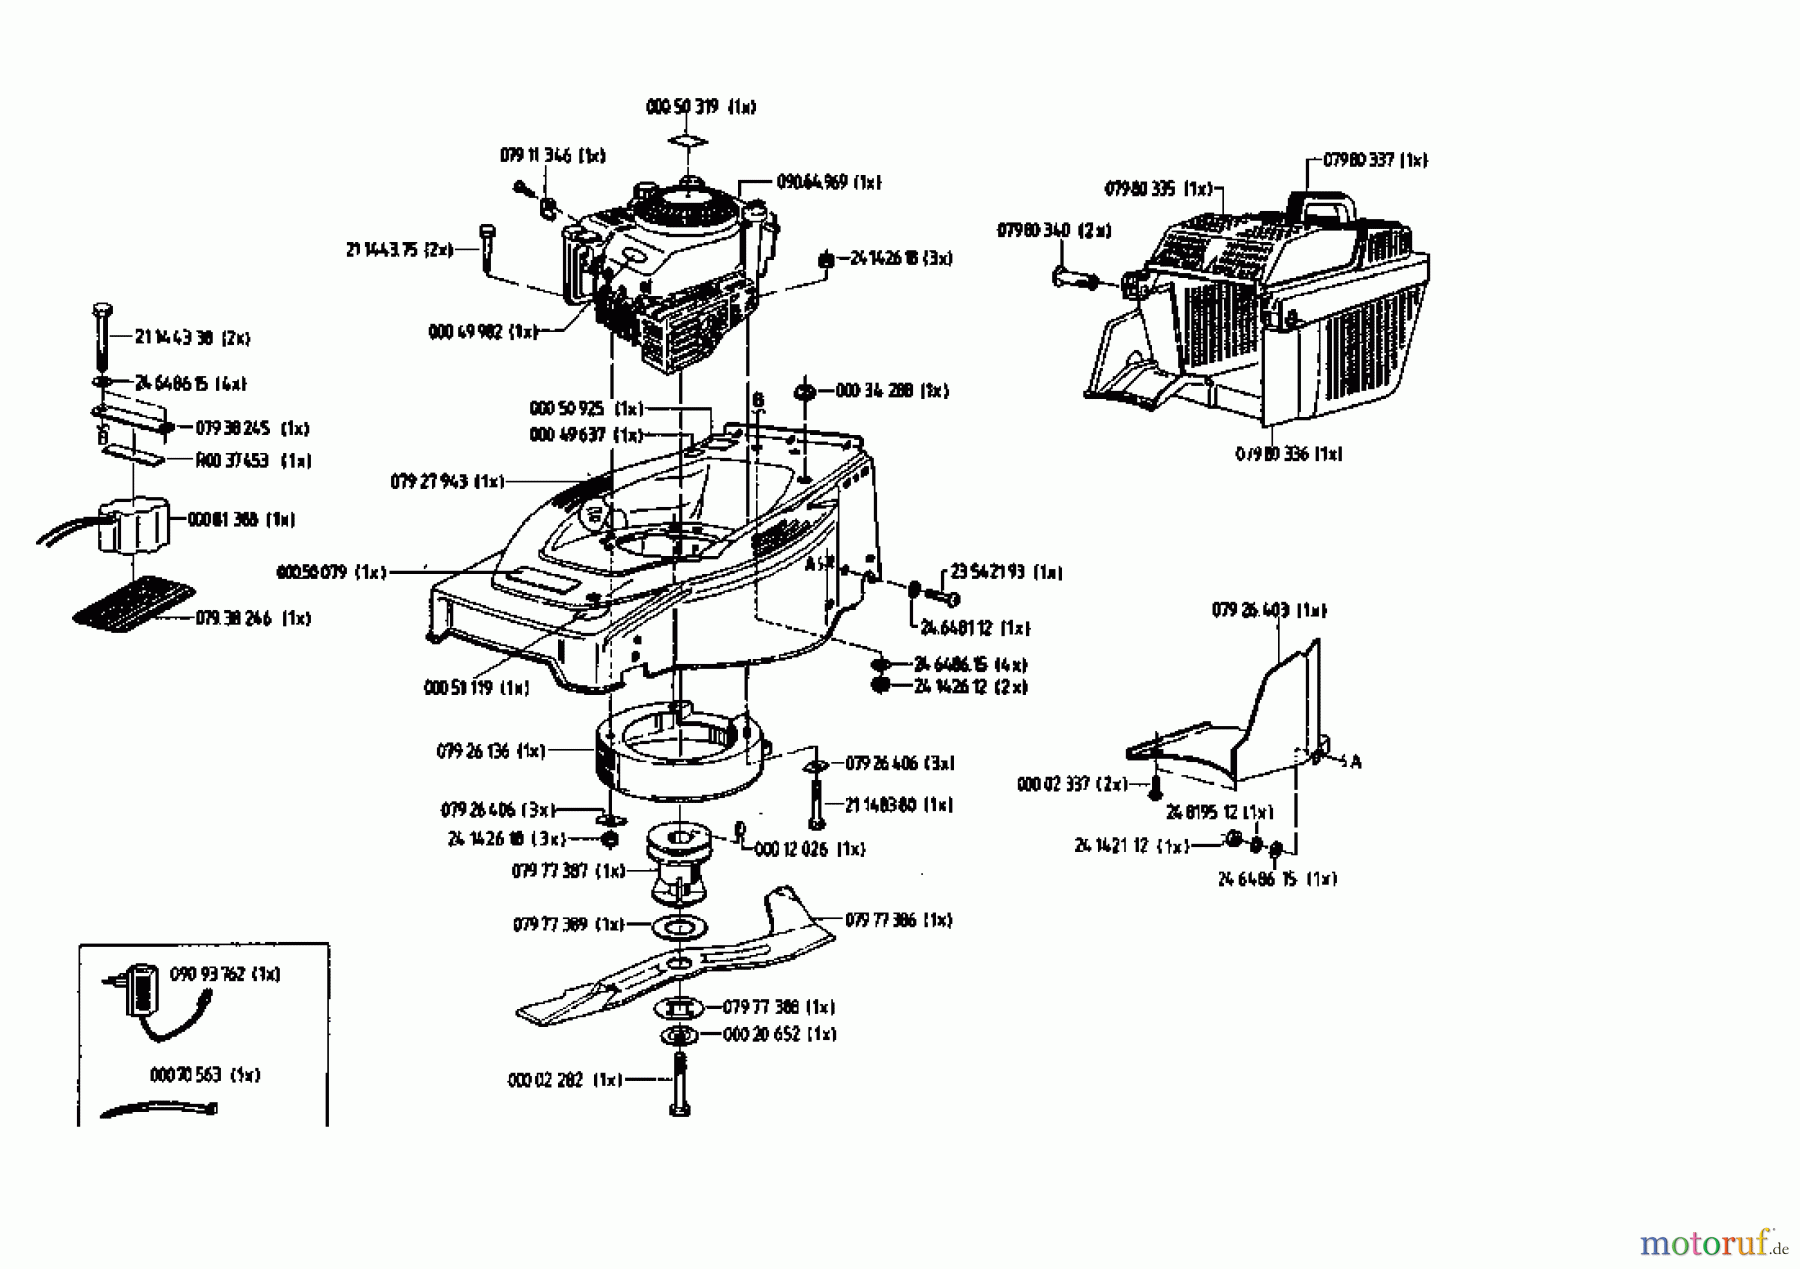  Gutbrod Petrol mower self propelled HB 48 REL 02815.02  (1993) Basic machine